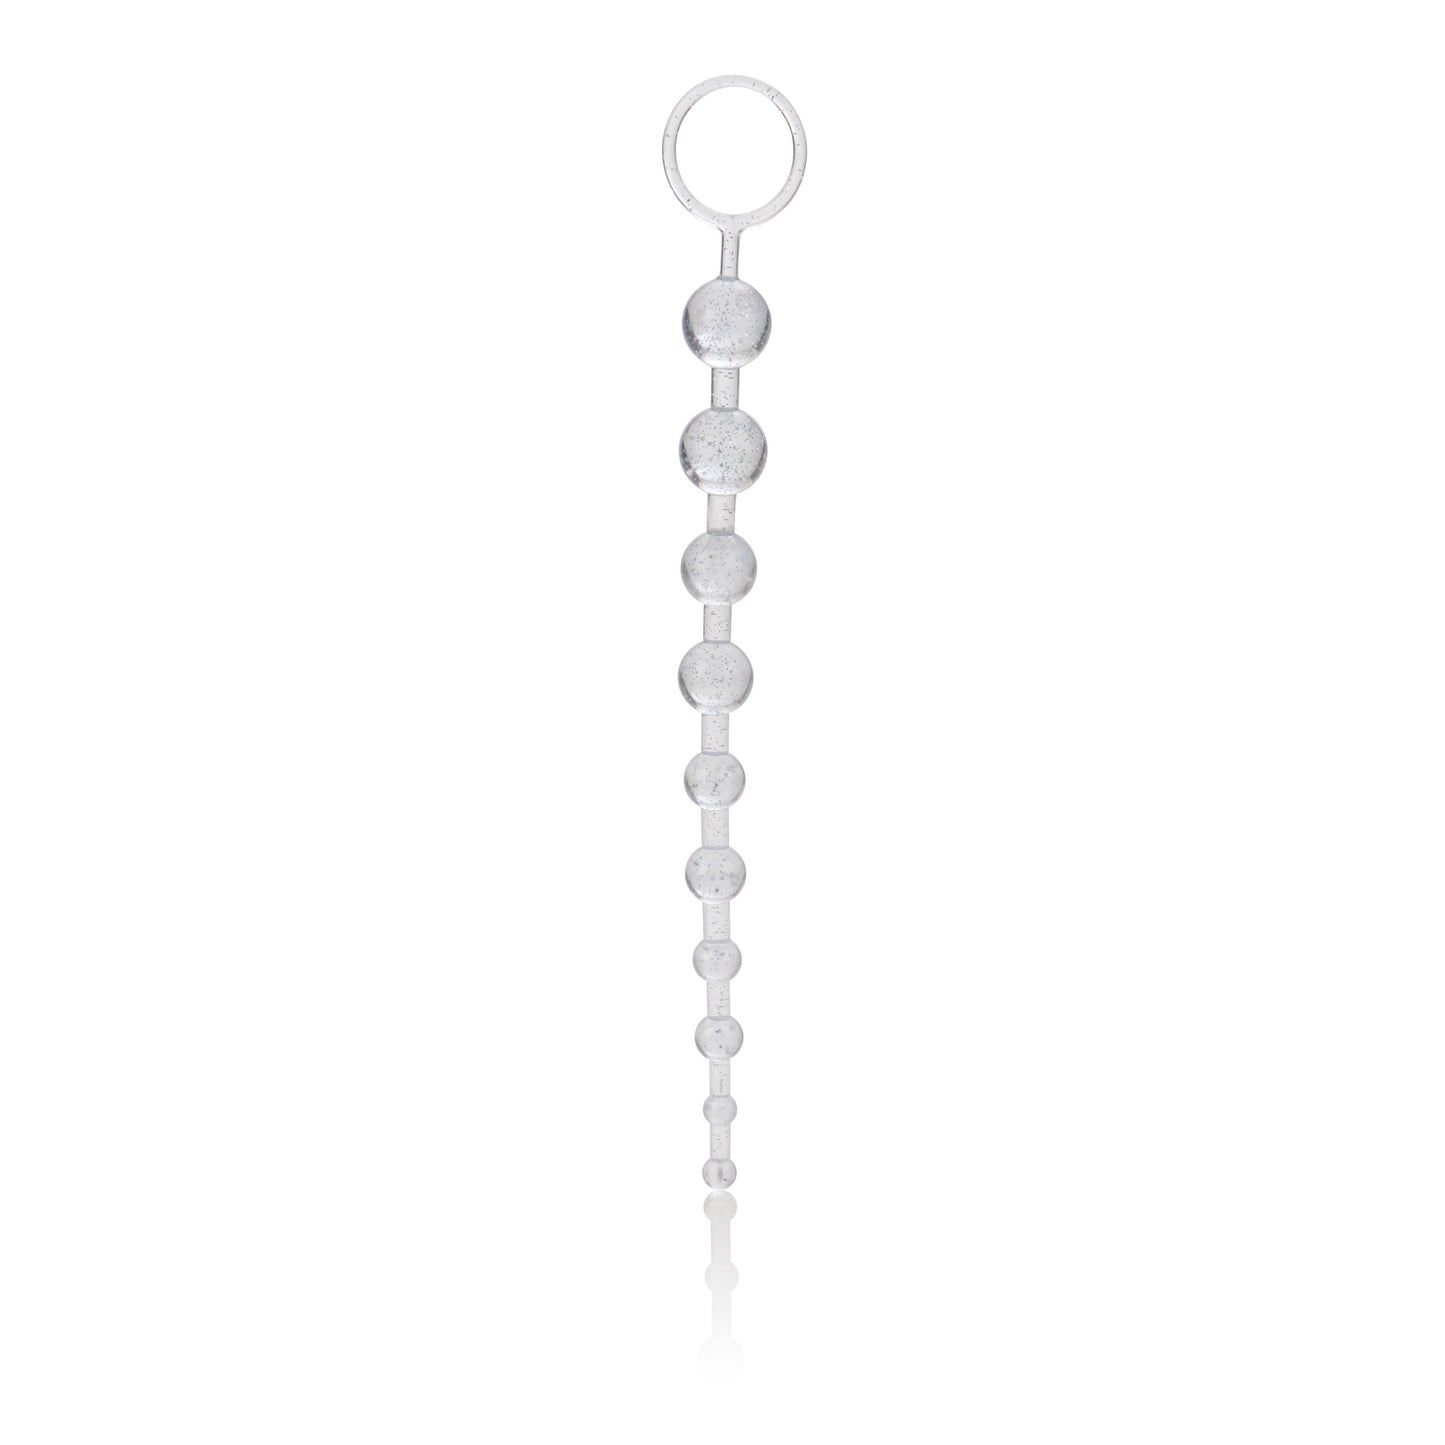 Platinum X-10 Beads SE1199052